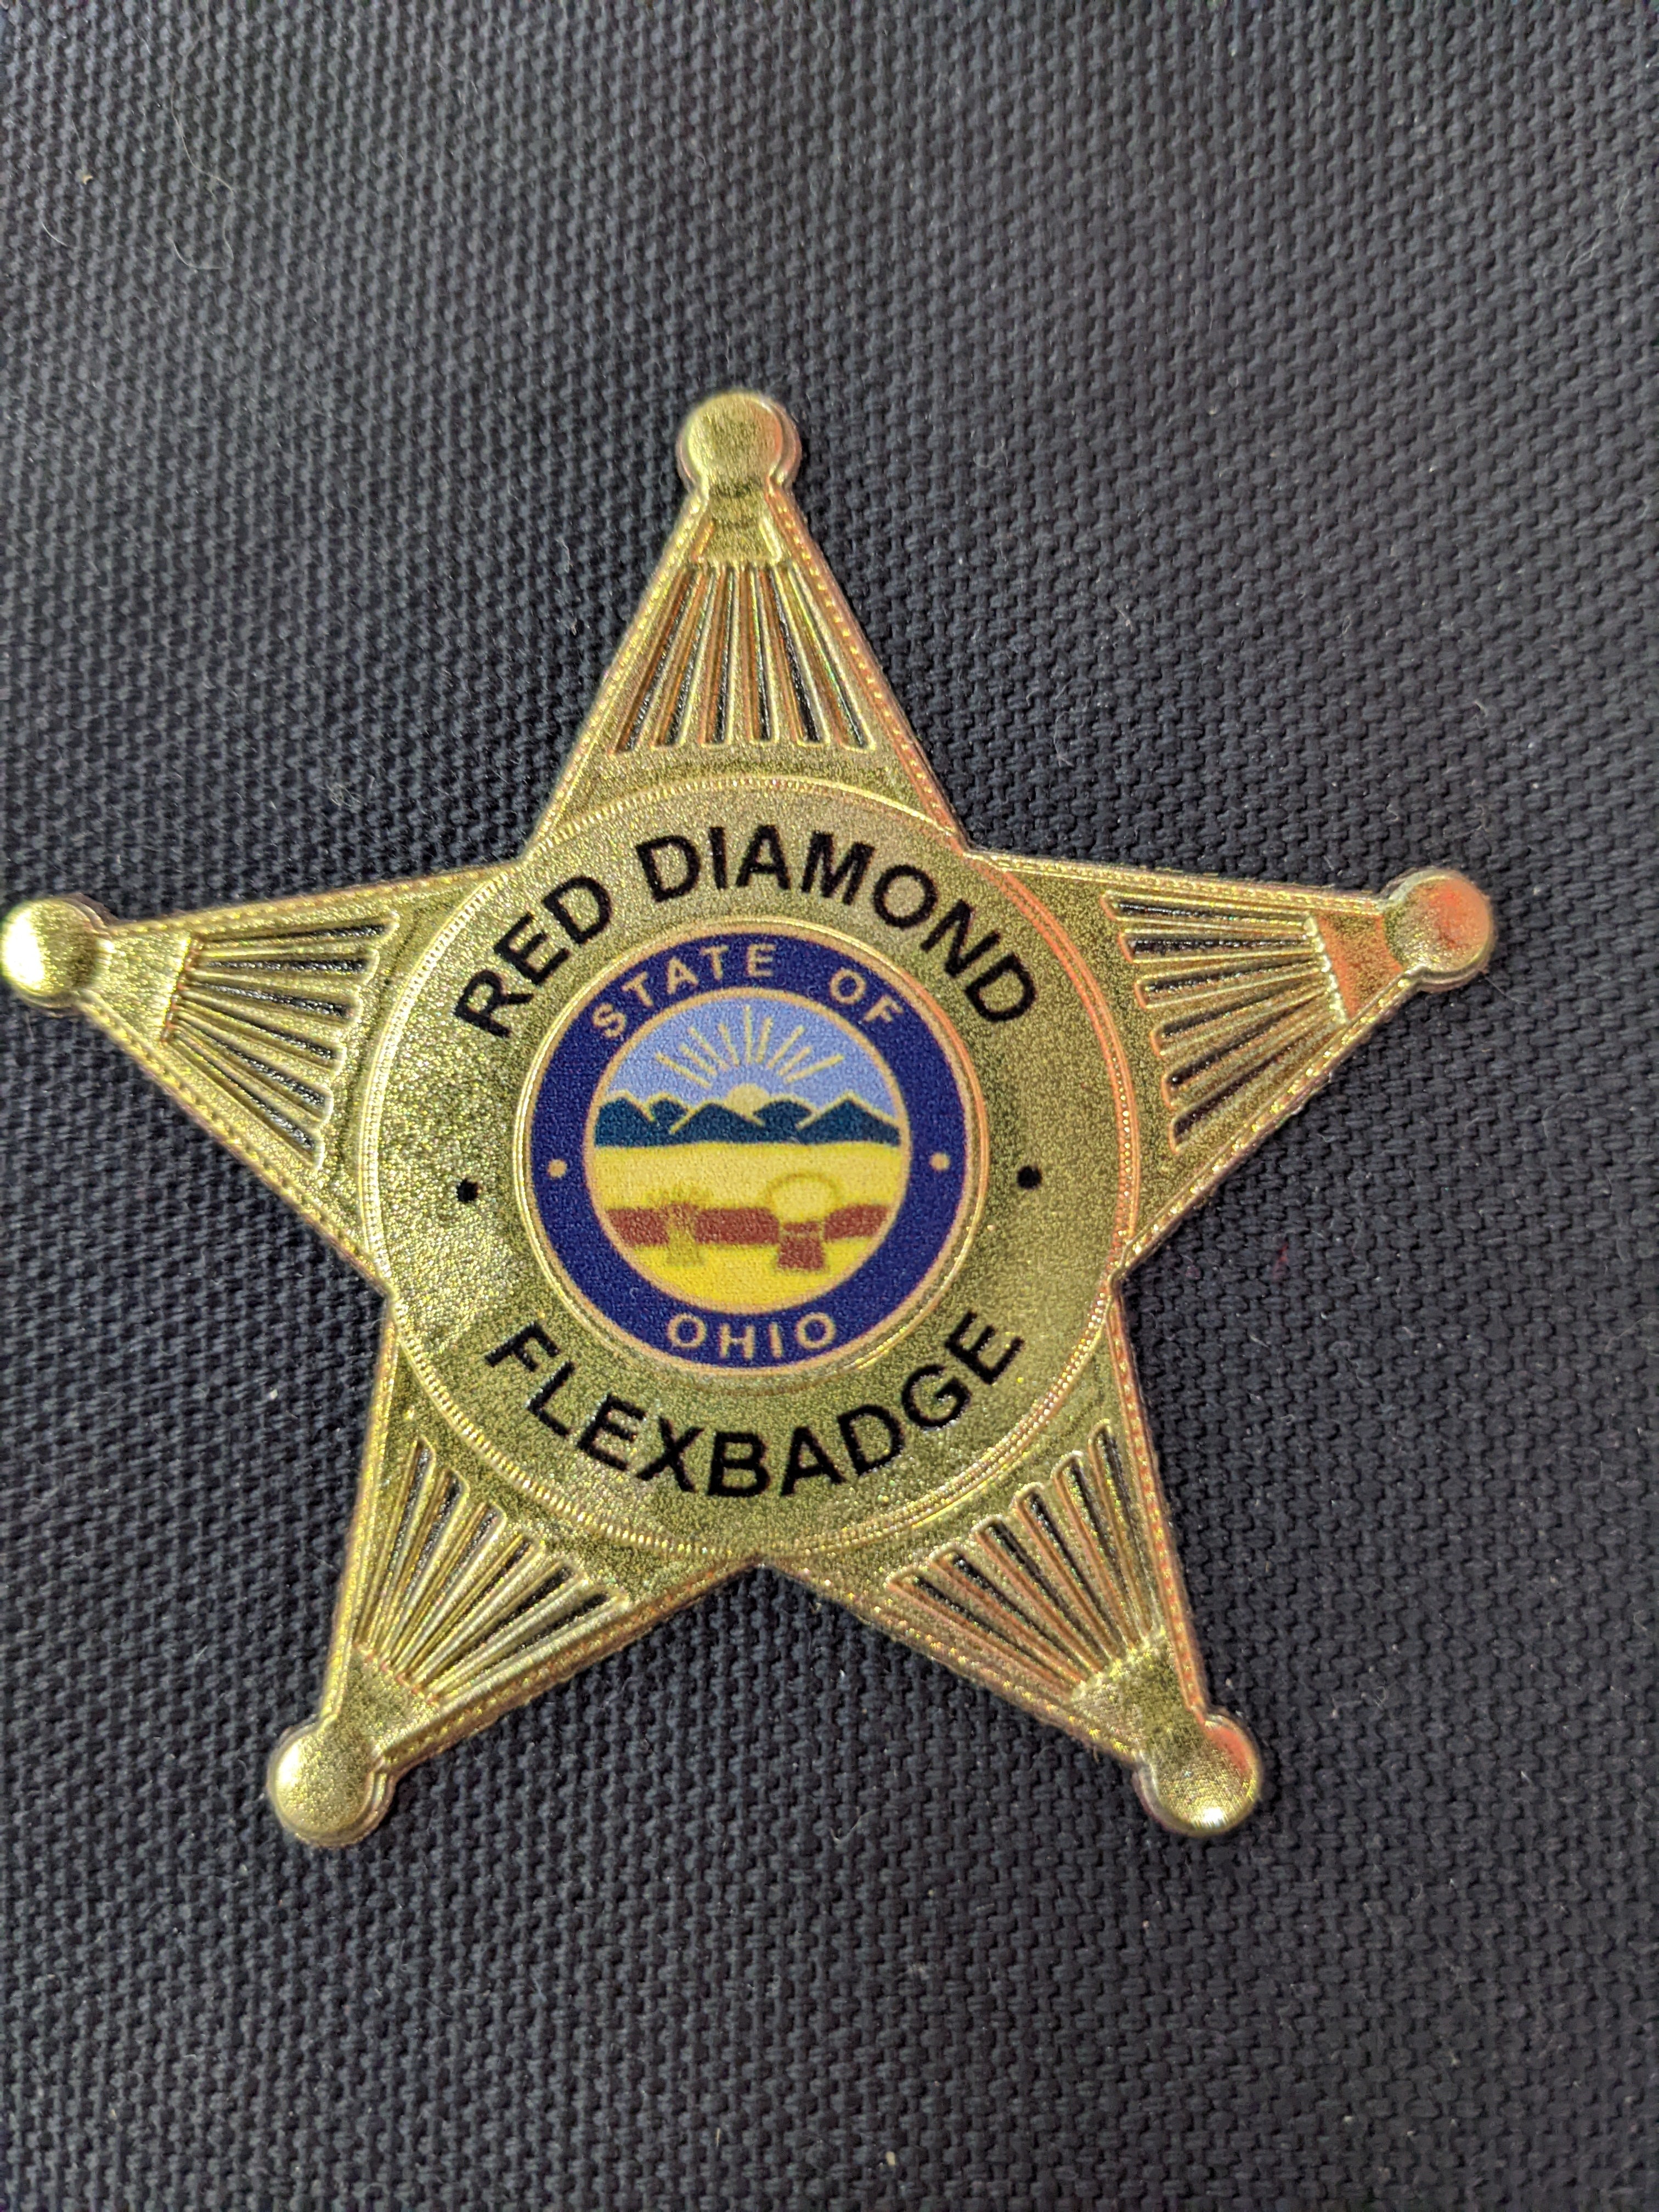 Blackinton Ohio Sheriff's FLEX Badge